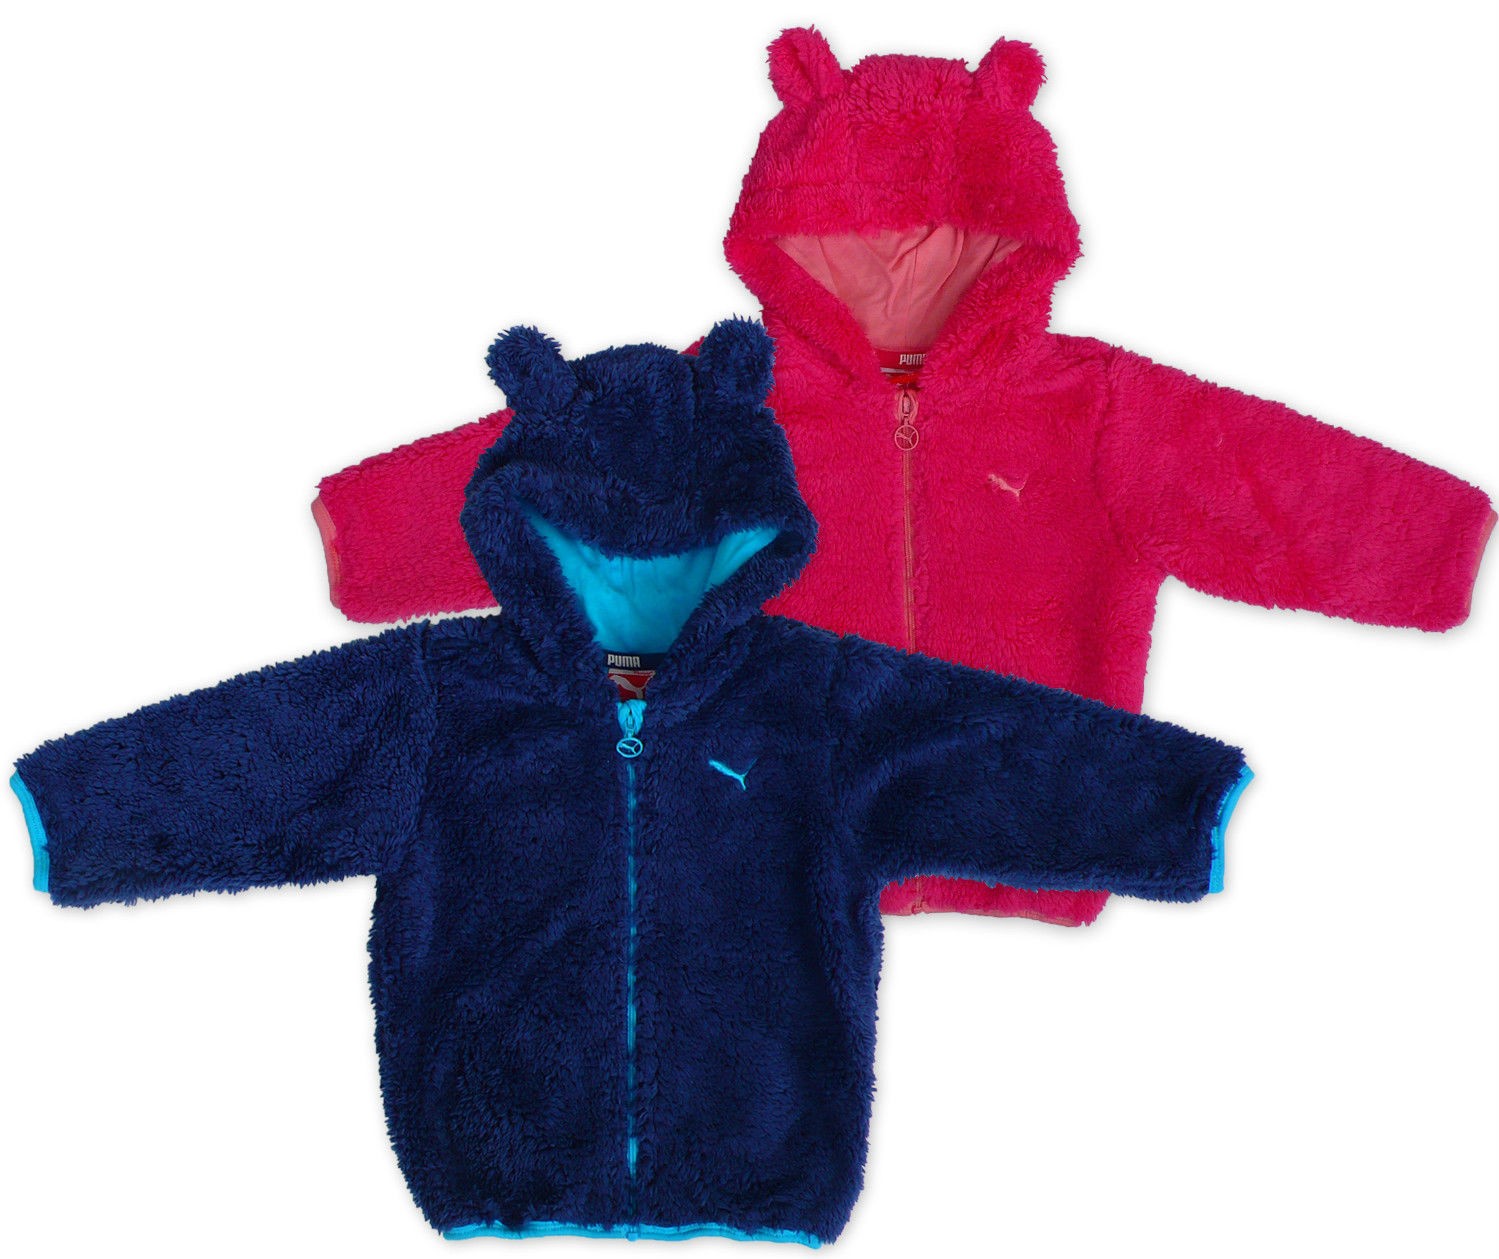 PUMA BABY/CHILDREN TEDDY JACKET PLUSH SWEAT STUFFED HOODIE BLUE/PINK | eBay